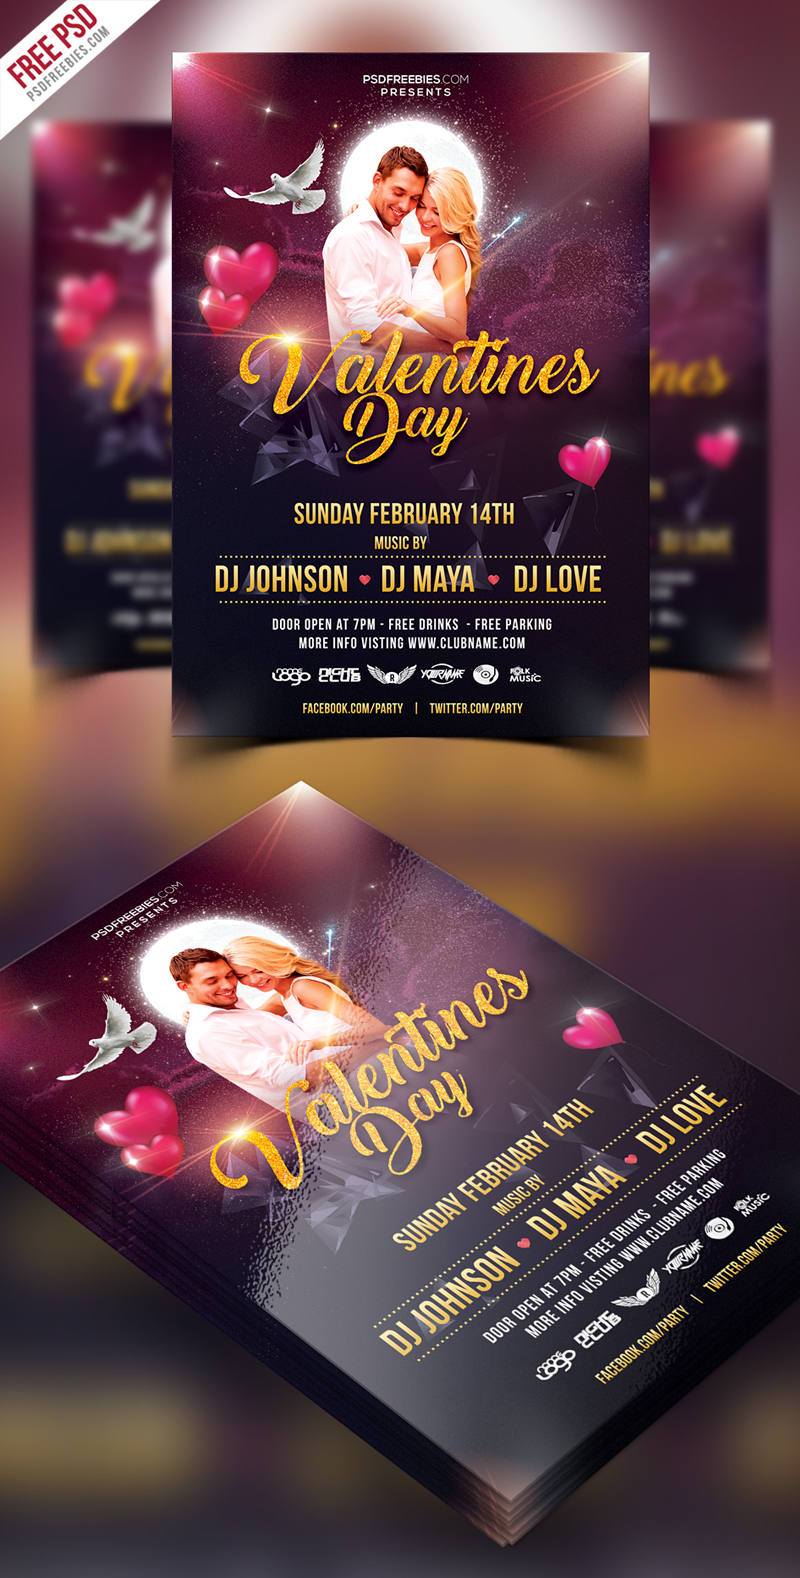 Valentines Day Flyer Design Free PSD